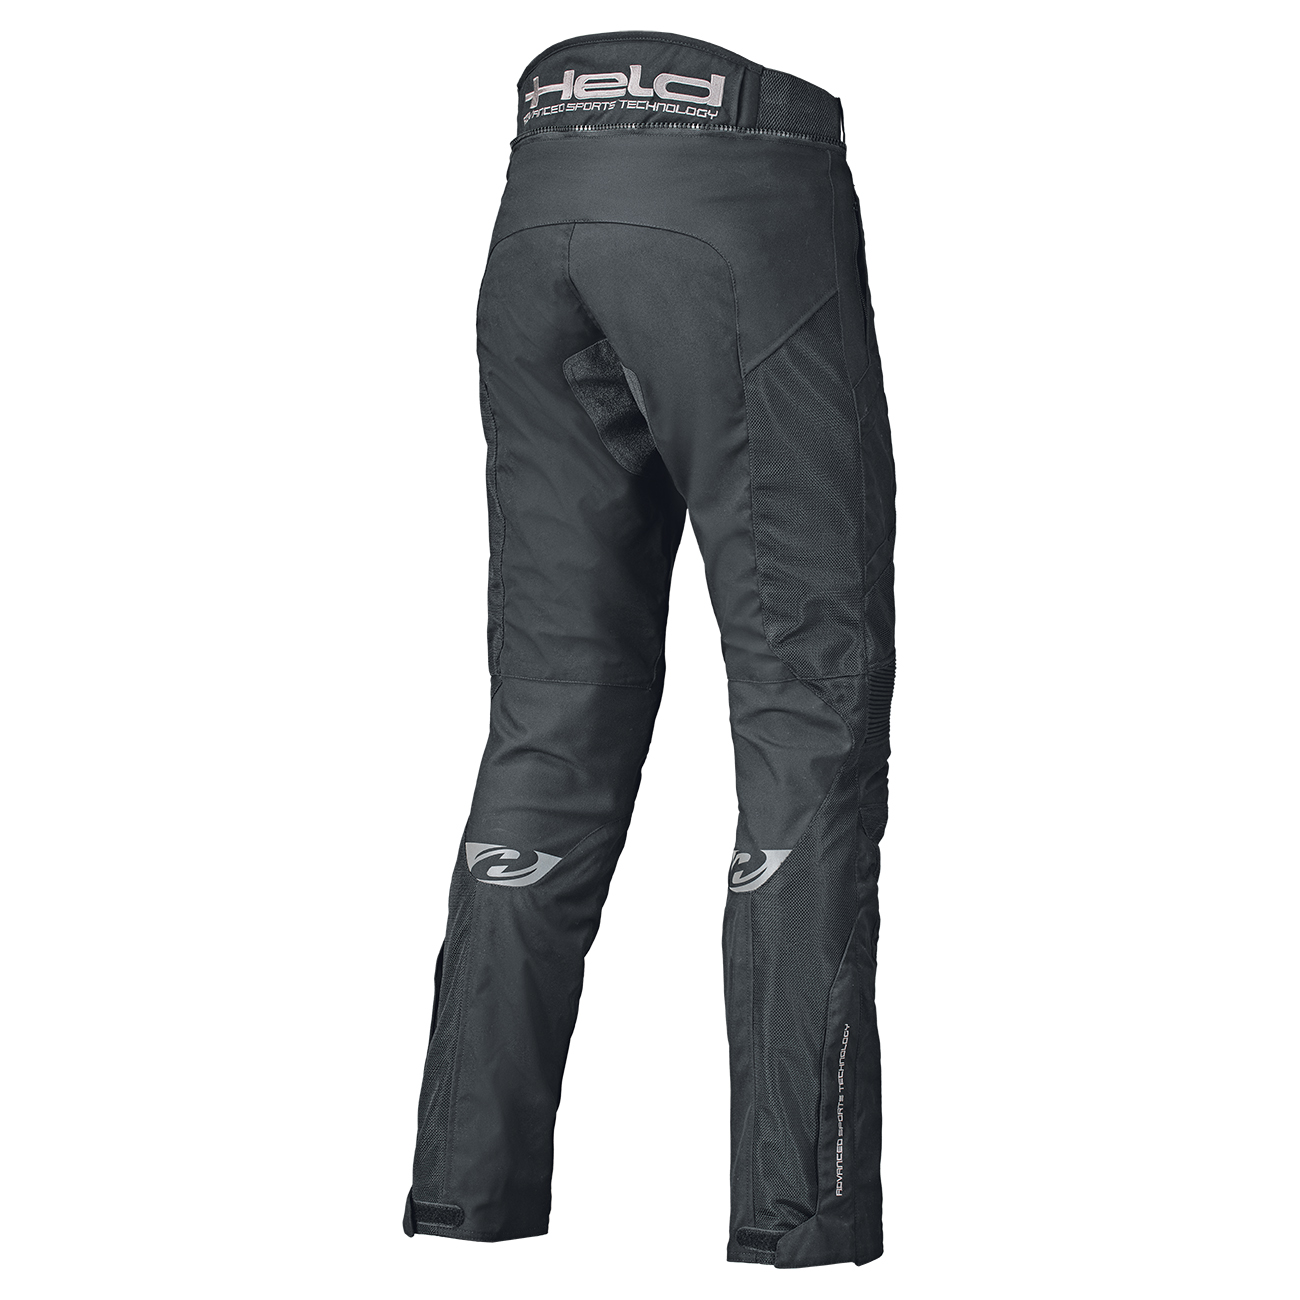 Vento II Sporty mesh trousers